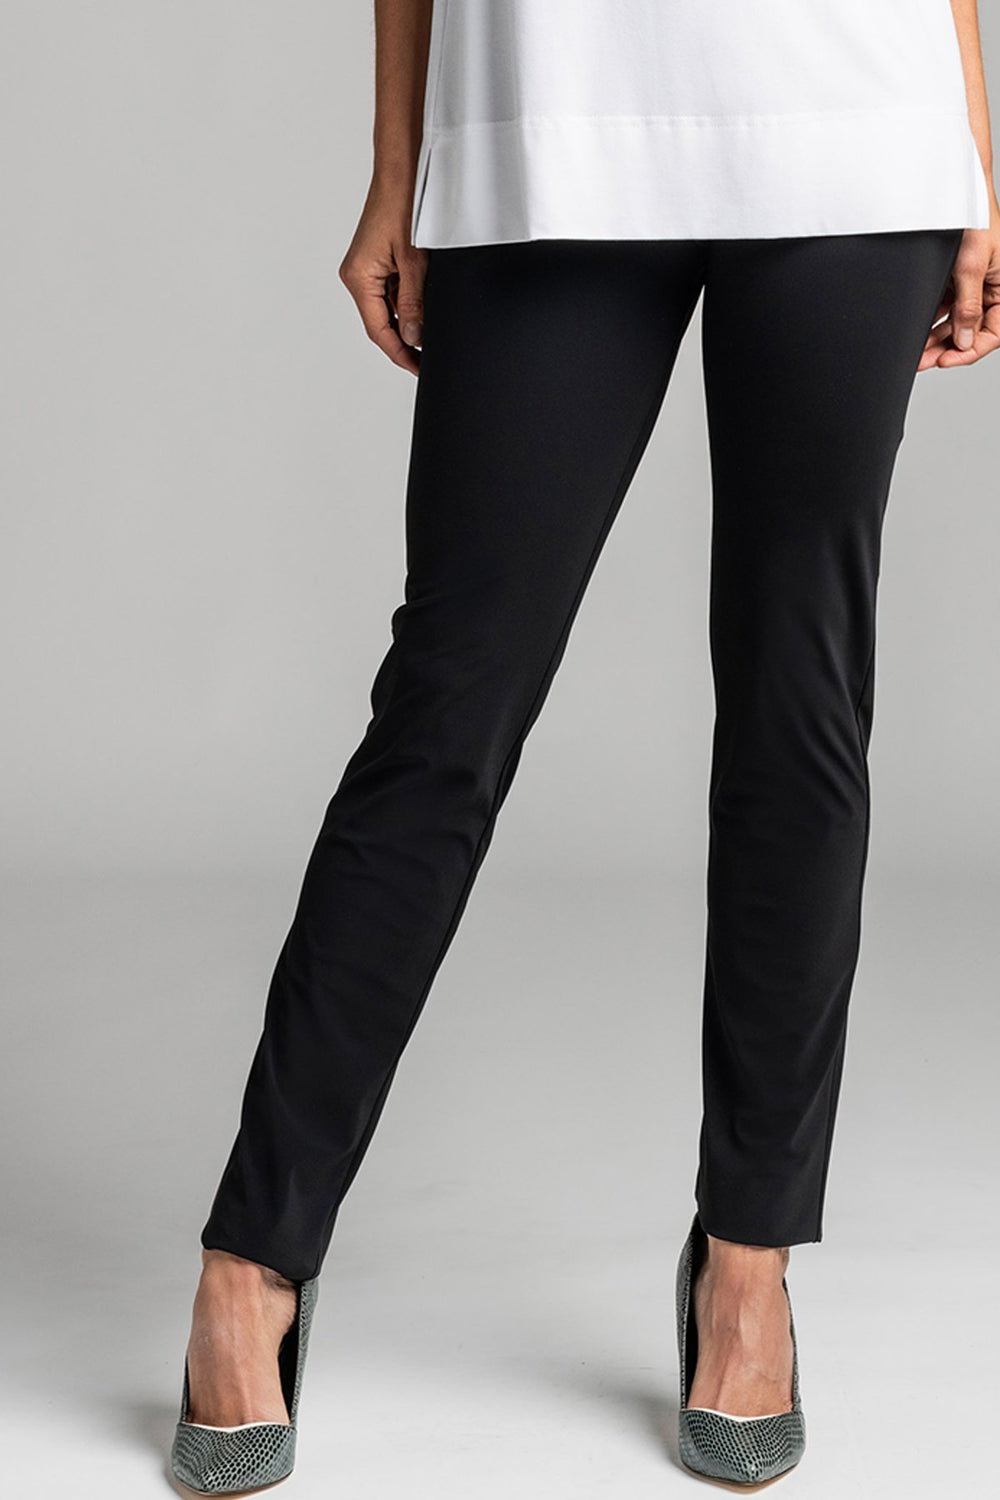 Skinny Cigarette Pants - Black | Singapore Online Boutique Office Wear |  ALYSSANDRA